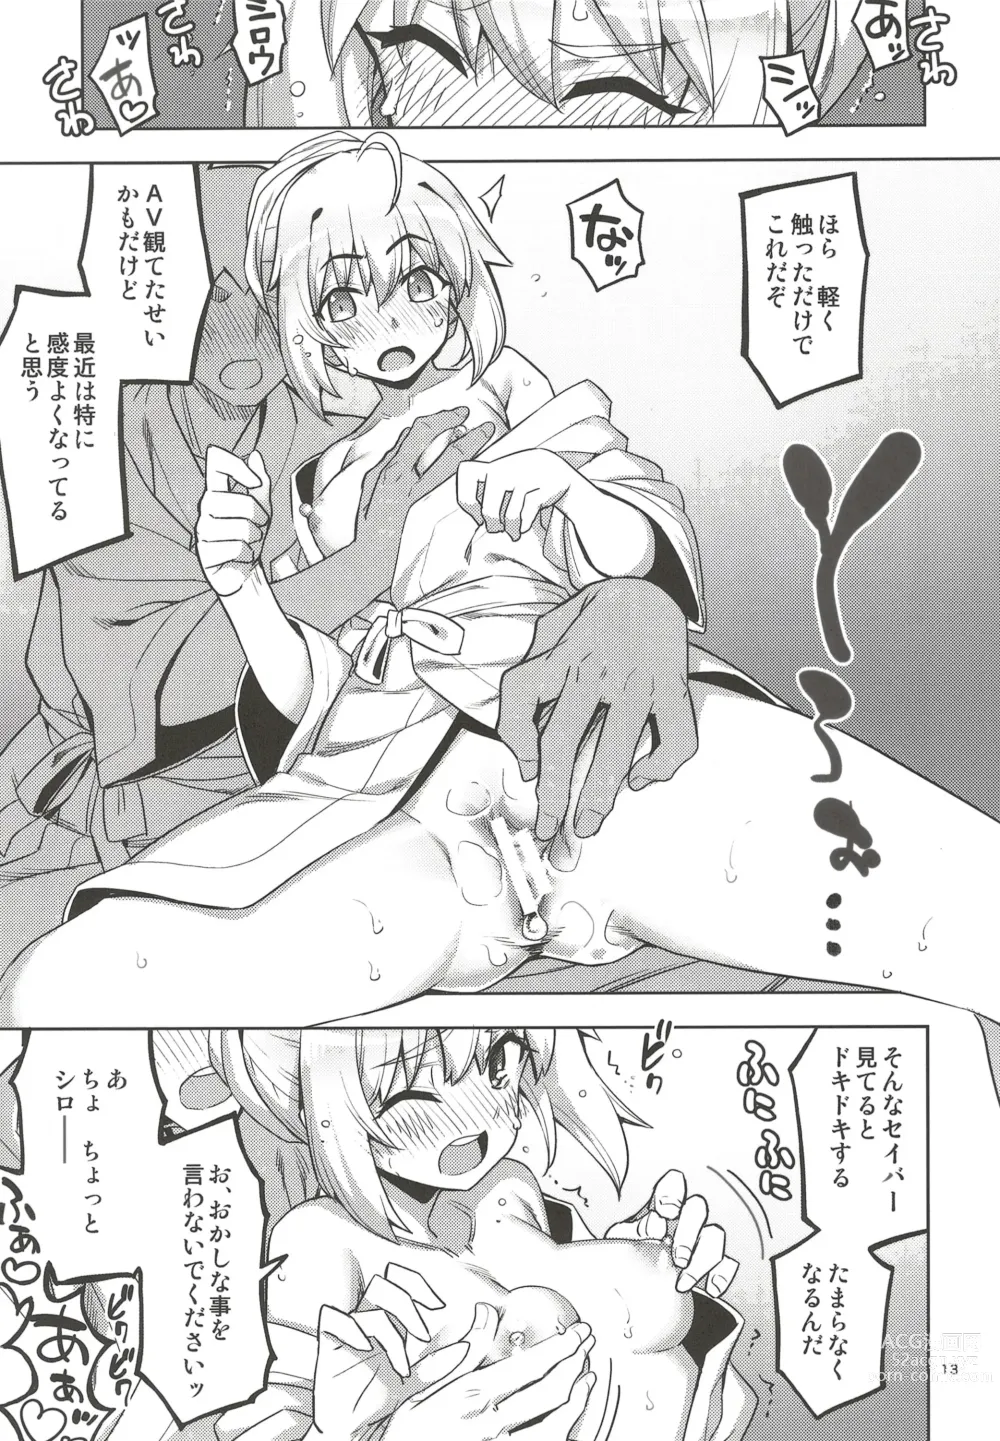 Page 13 of doujinshi RE32